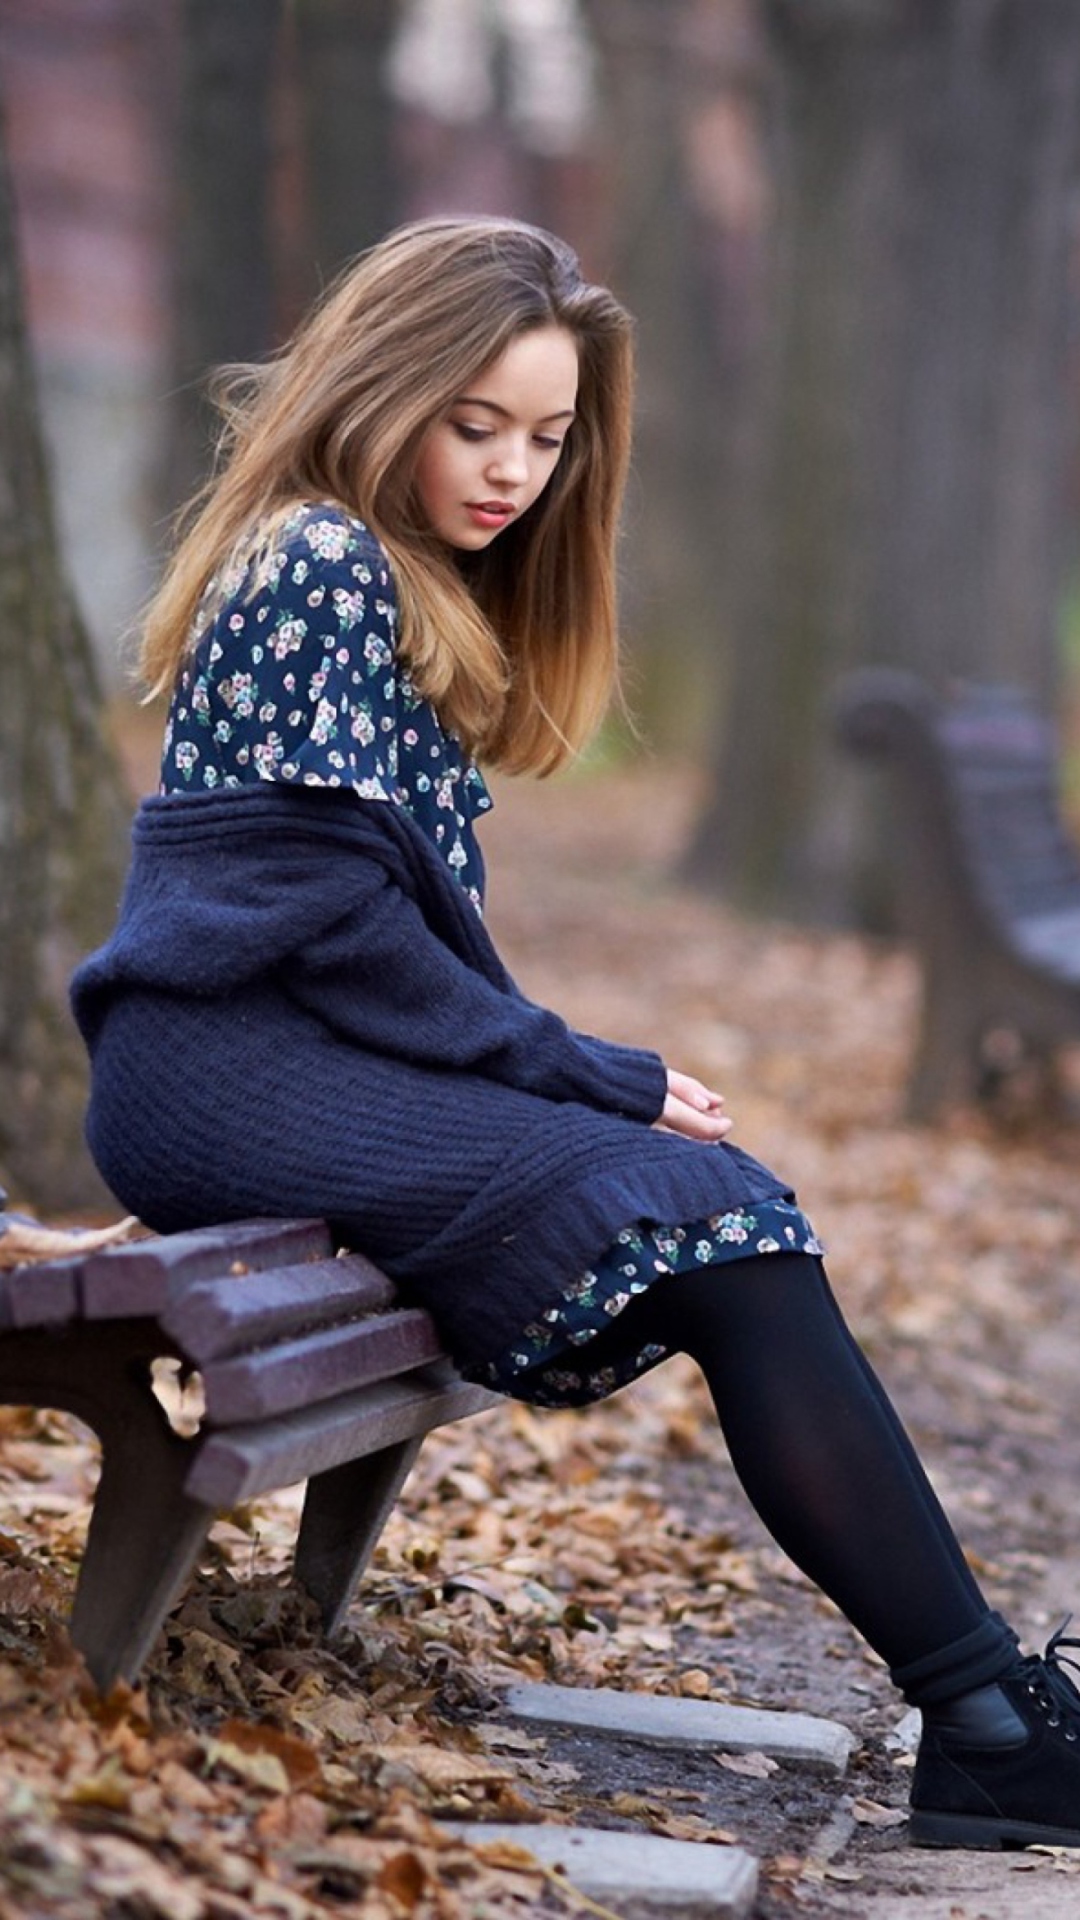 Das Beautiful Girl Sitting On Bench In Autumn Park Wallpaper 1080x1920